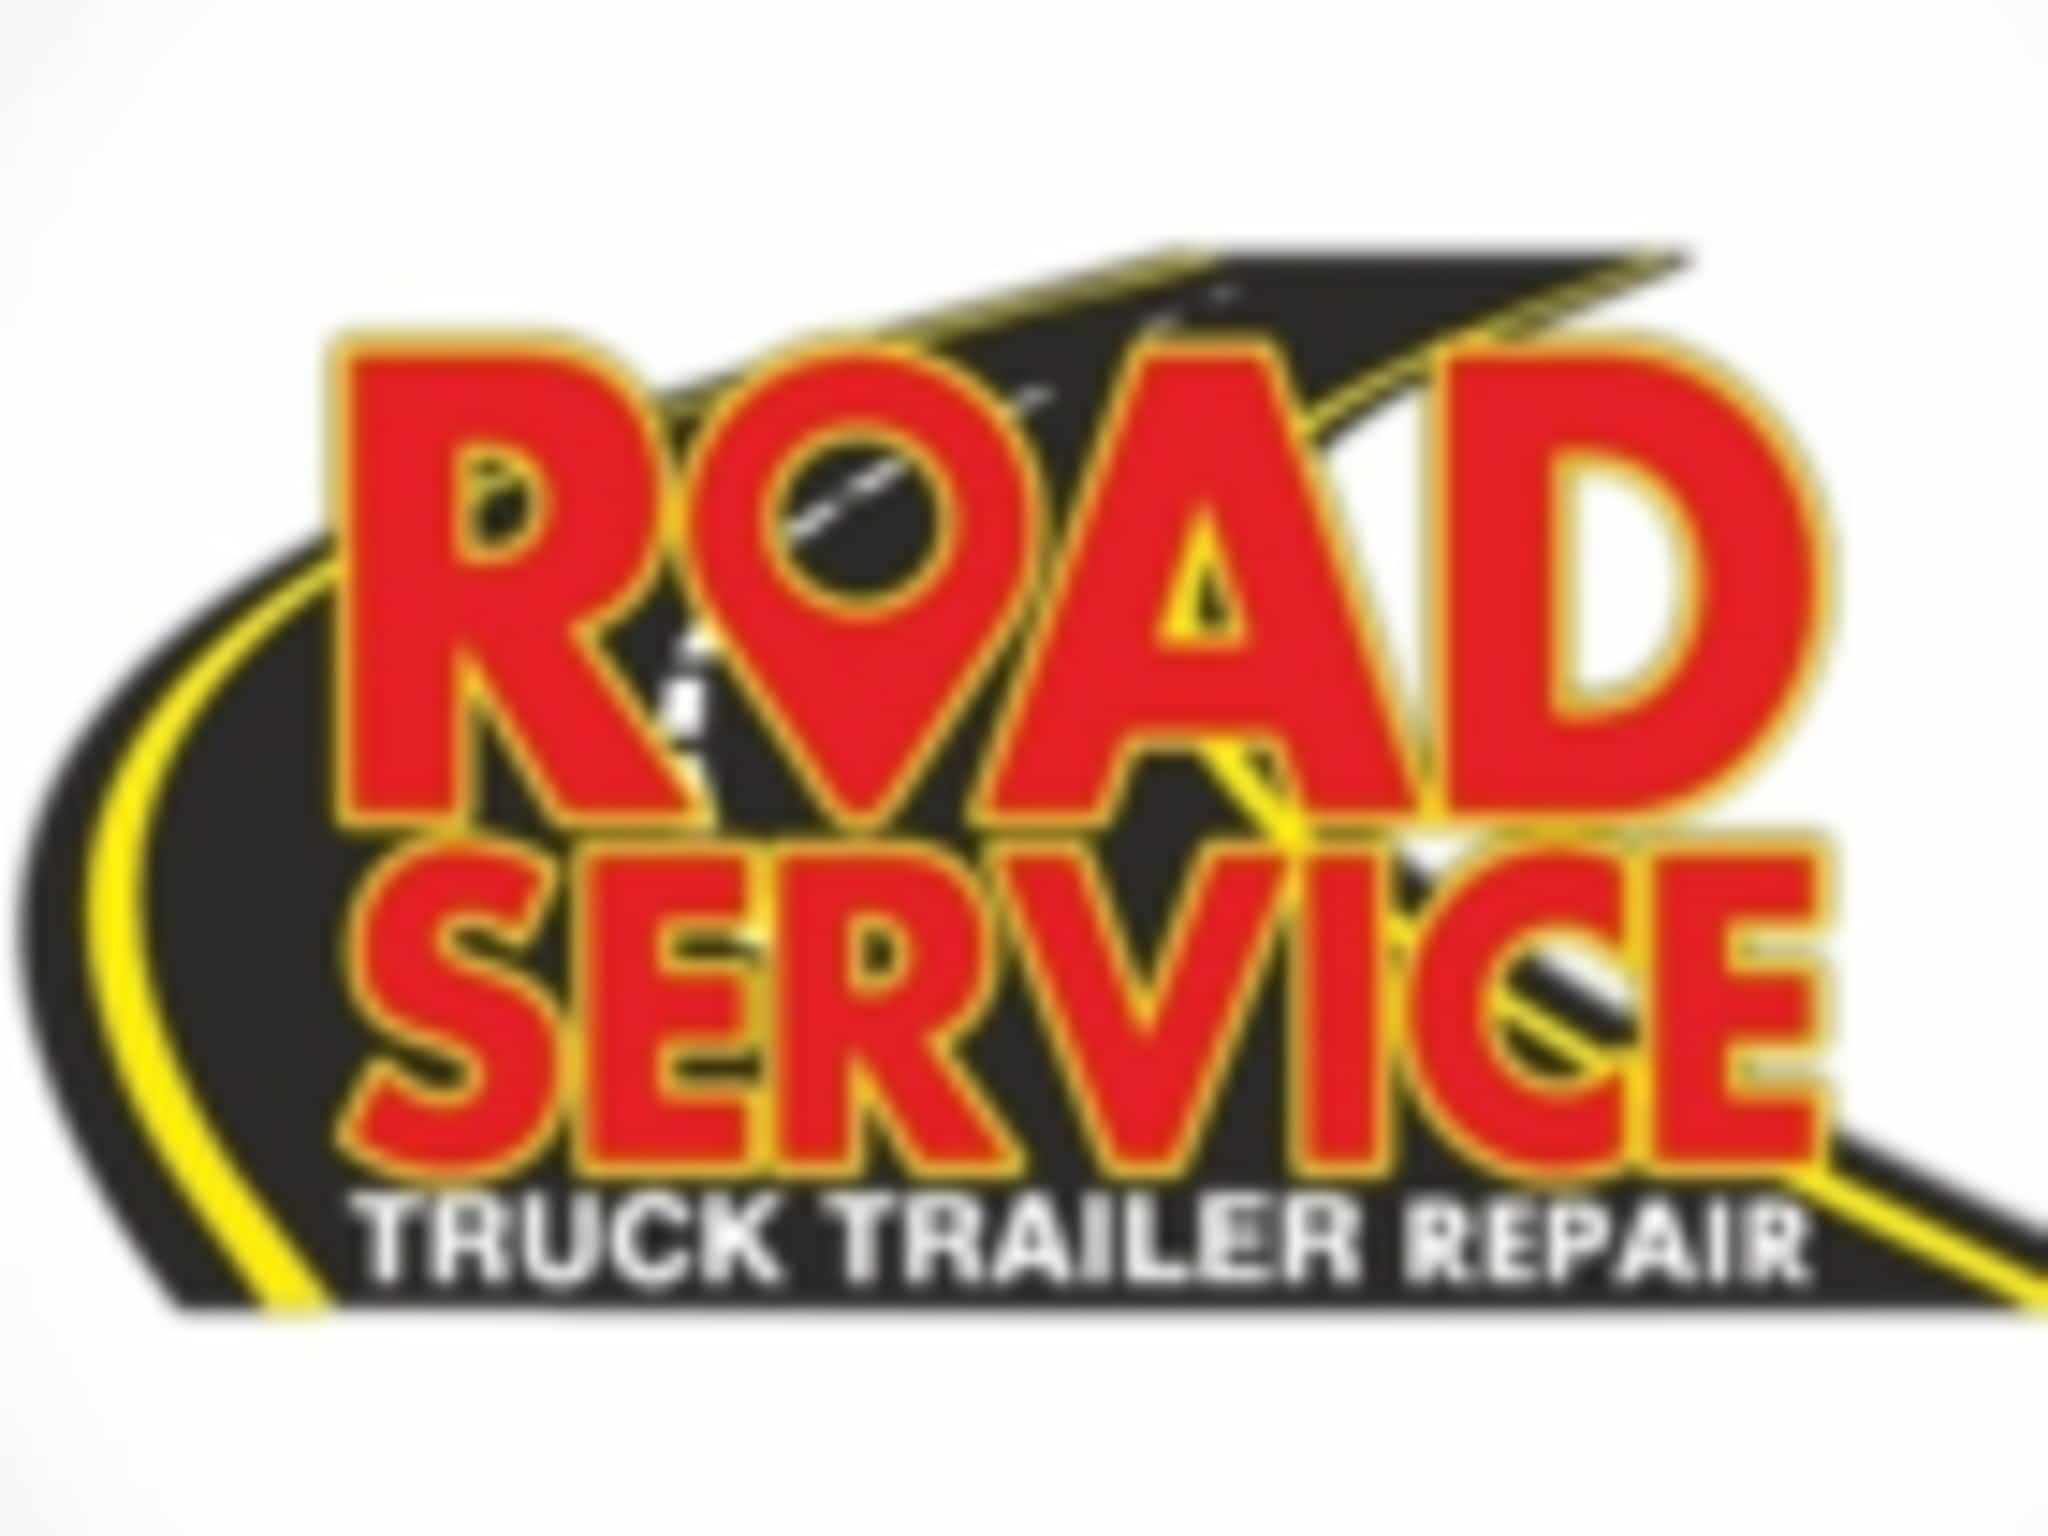 photo Road Service Truck Trailer Repair